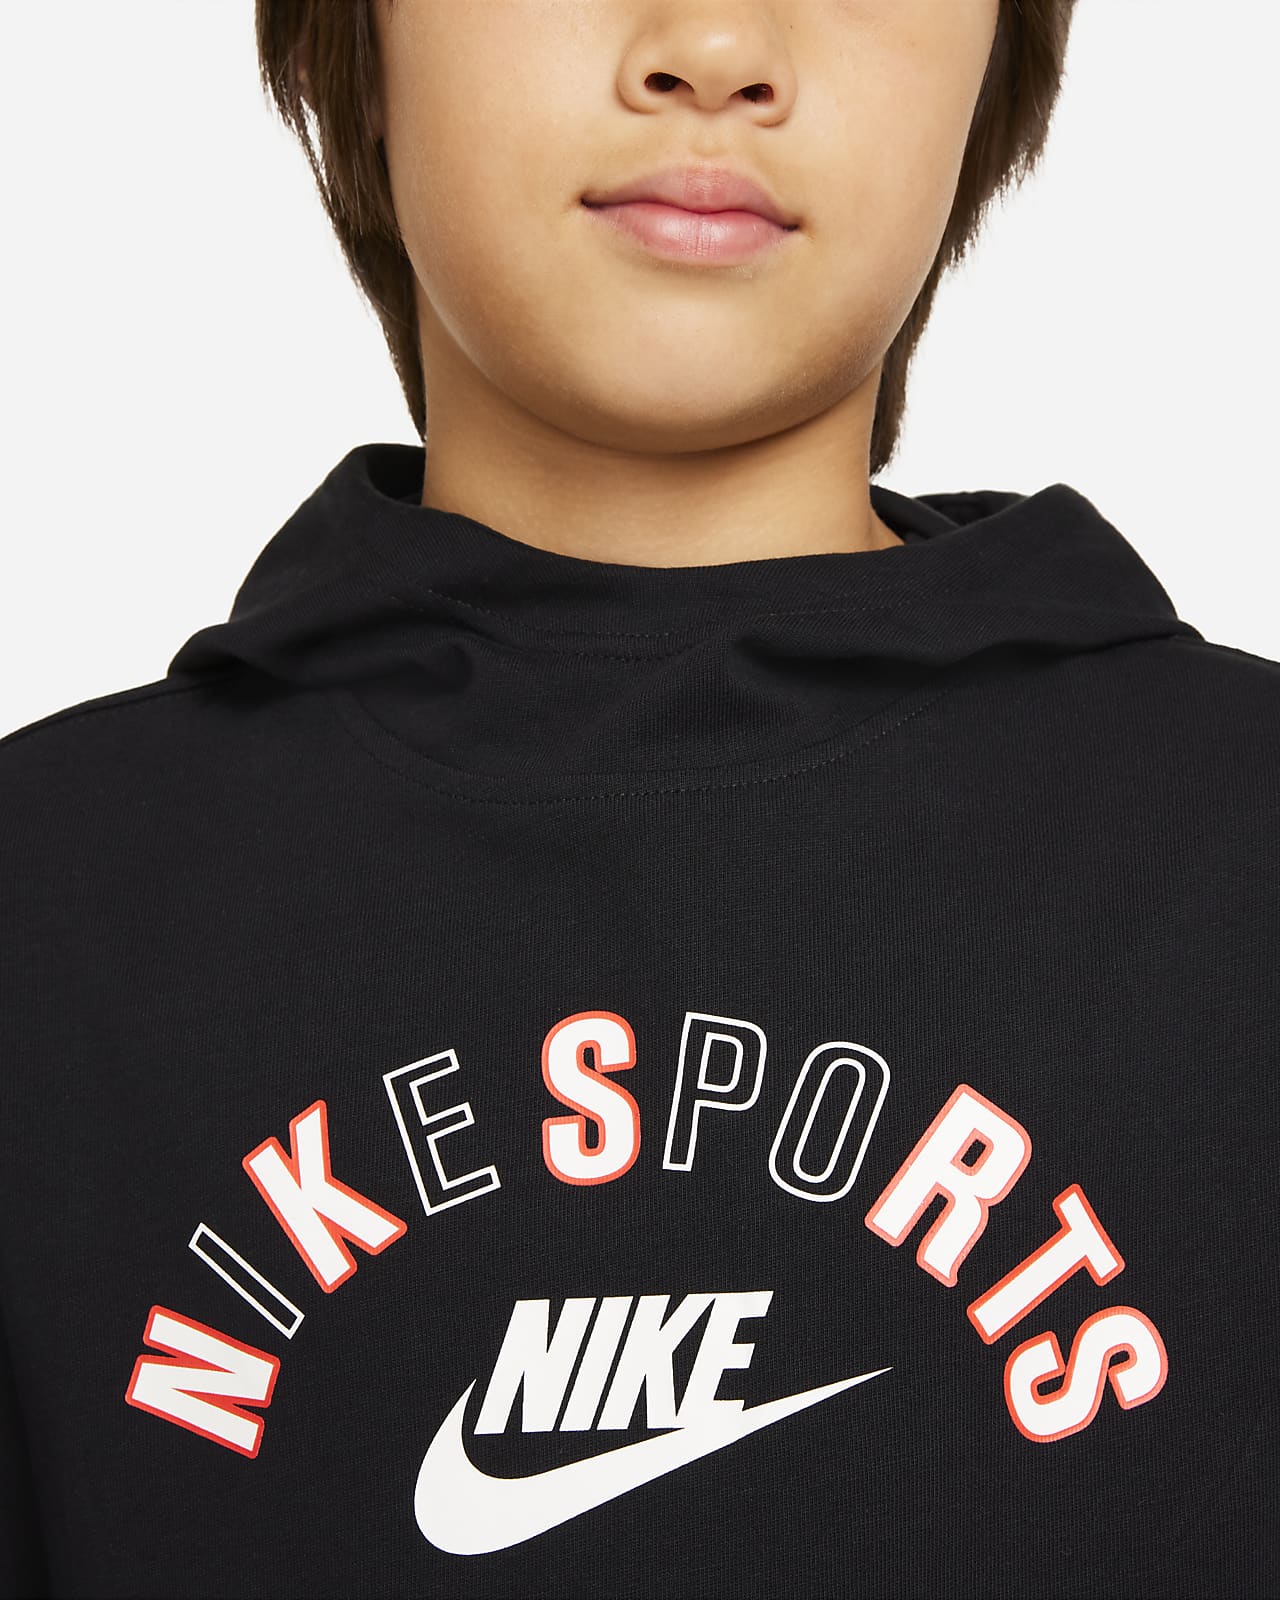 Nike Sportswear Big Kids' (Boys') Hoodie. Nike.com